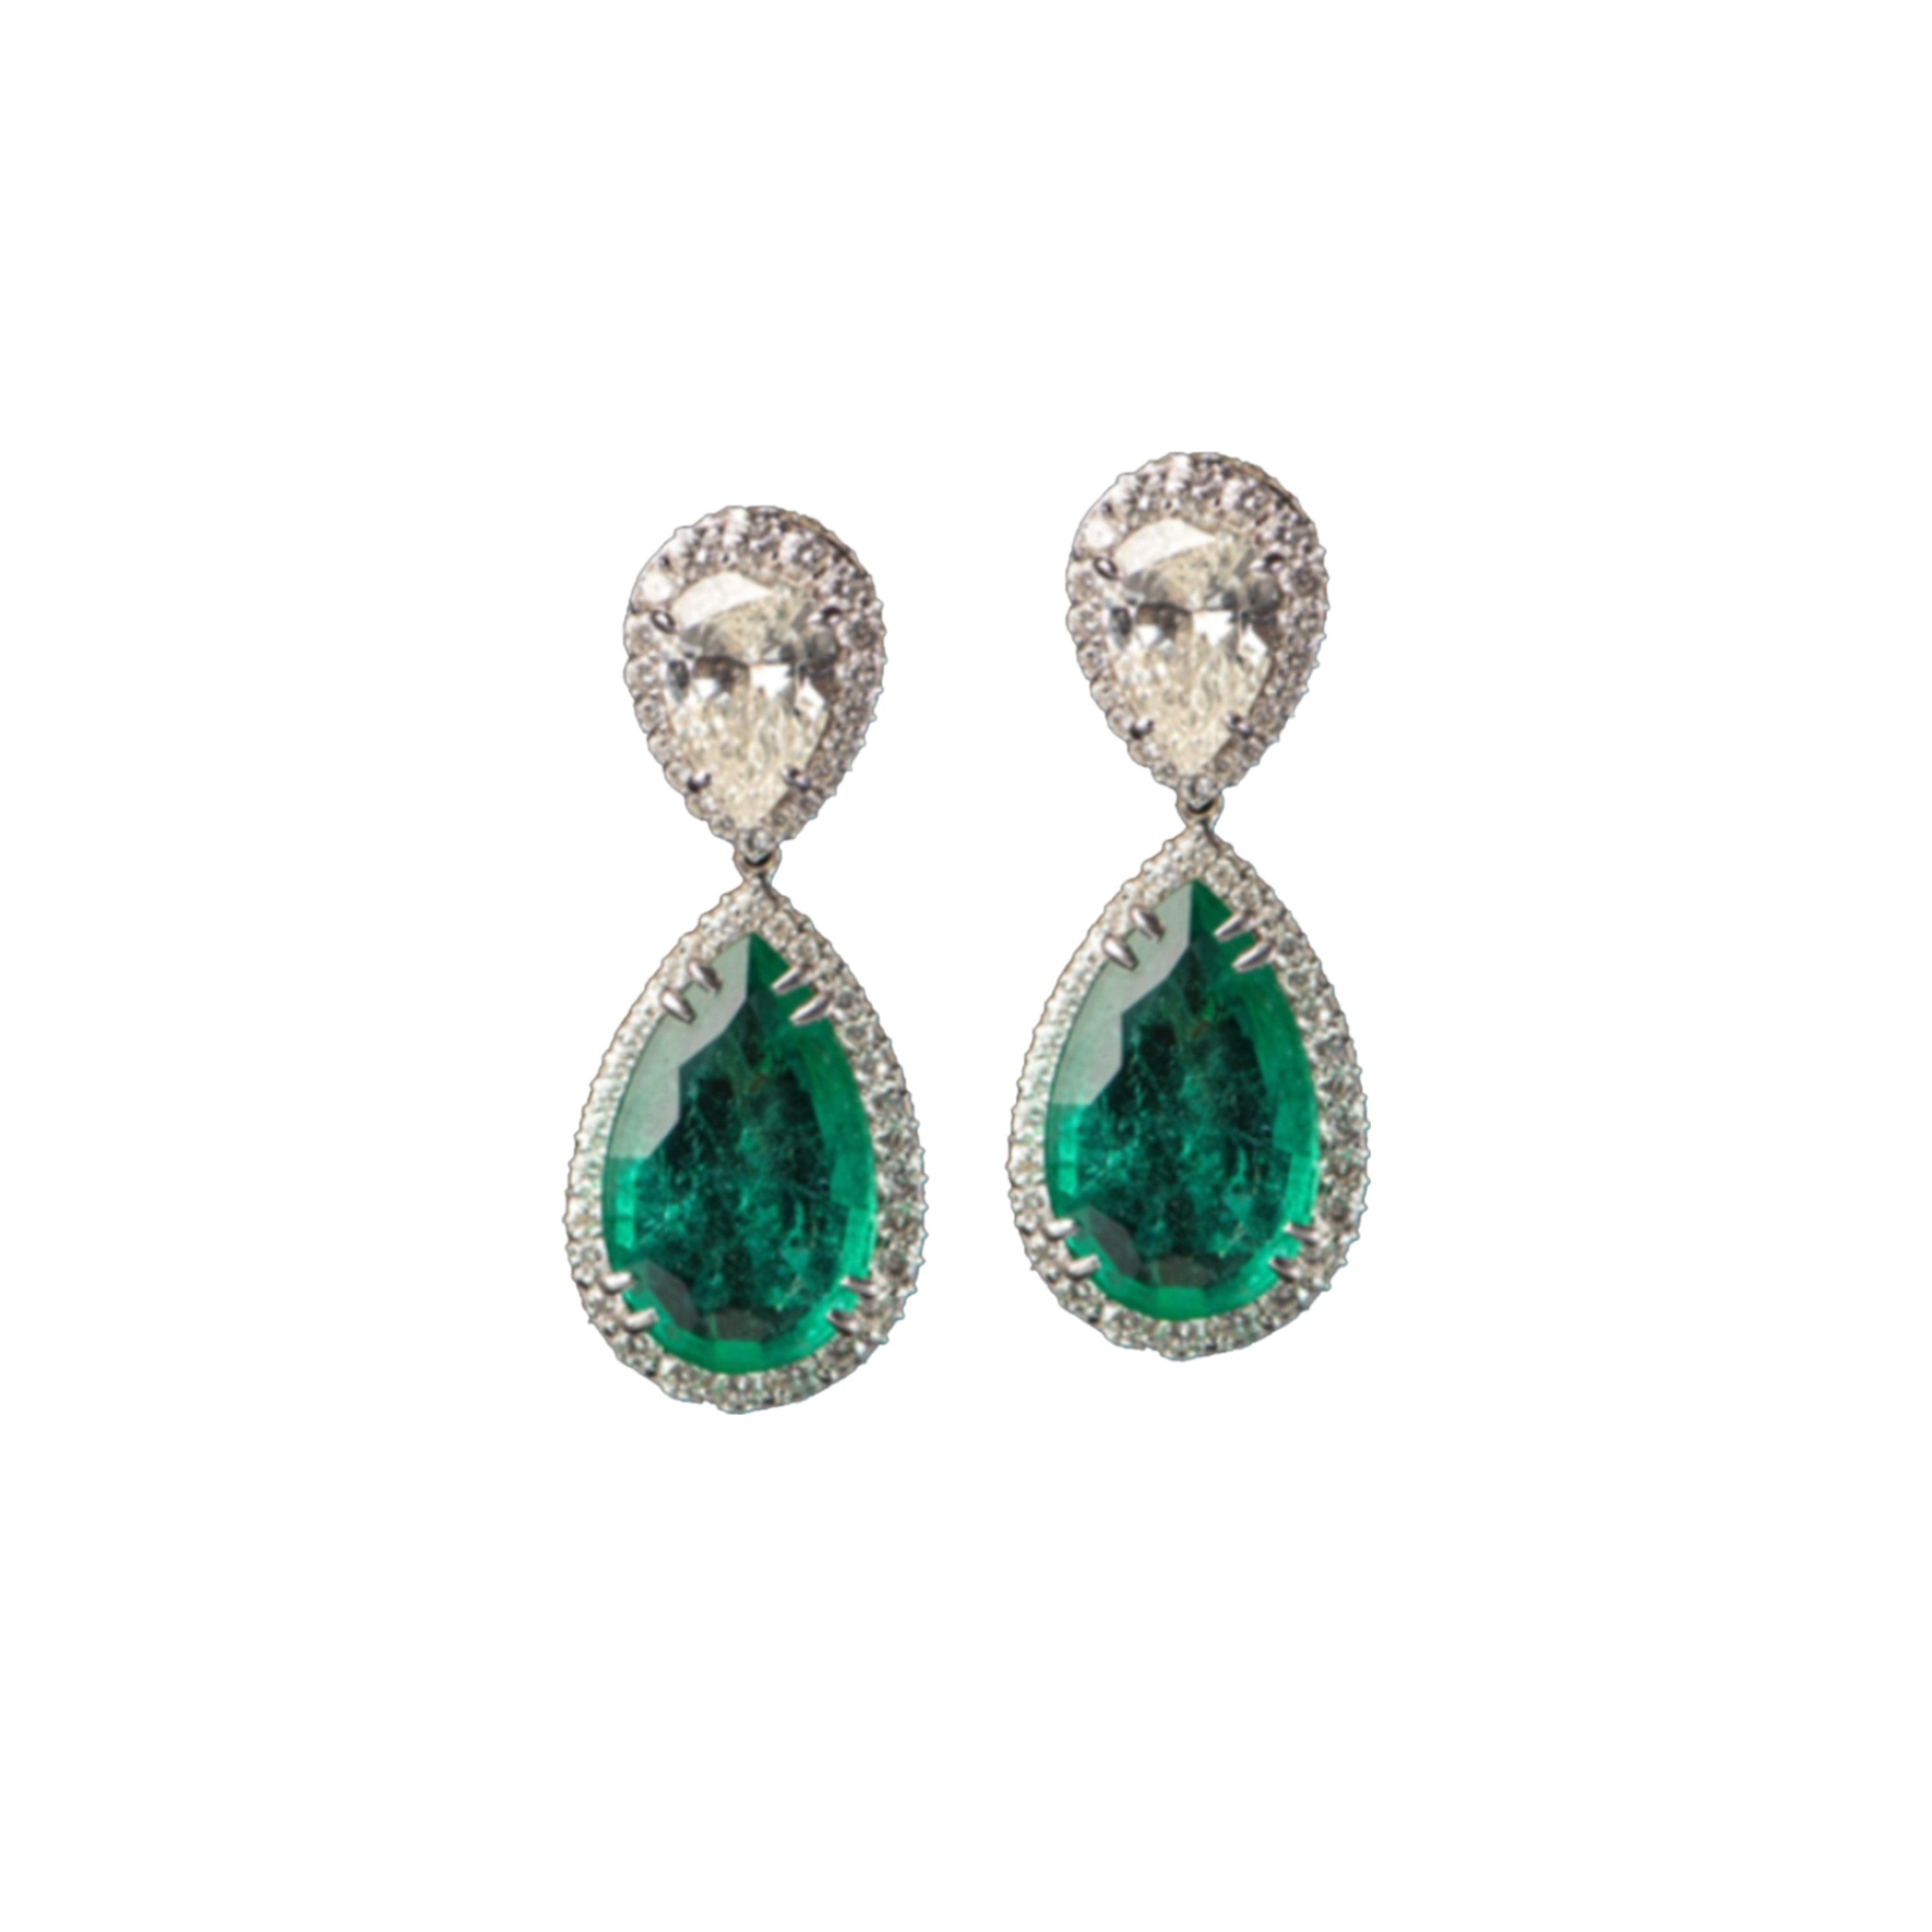 Tear Drop Diamond and Emerald Earrings